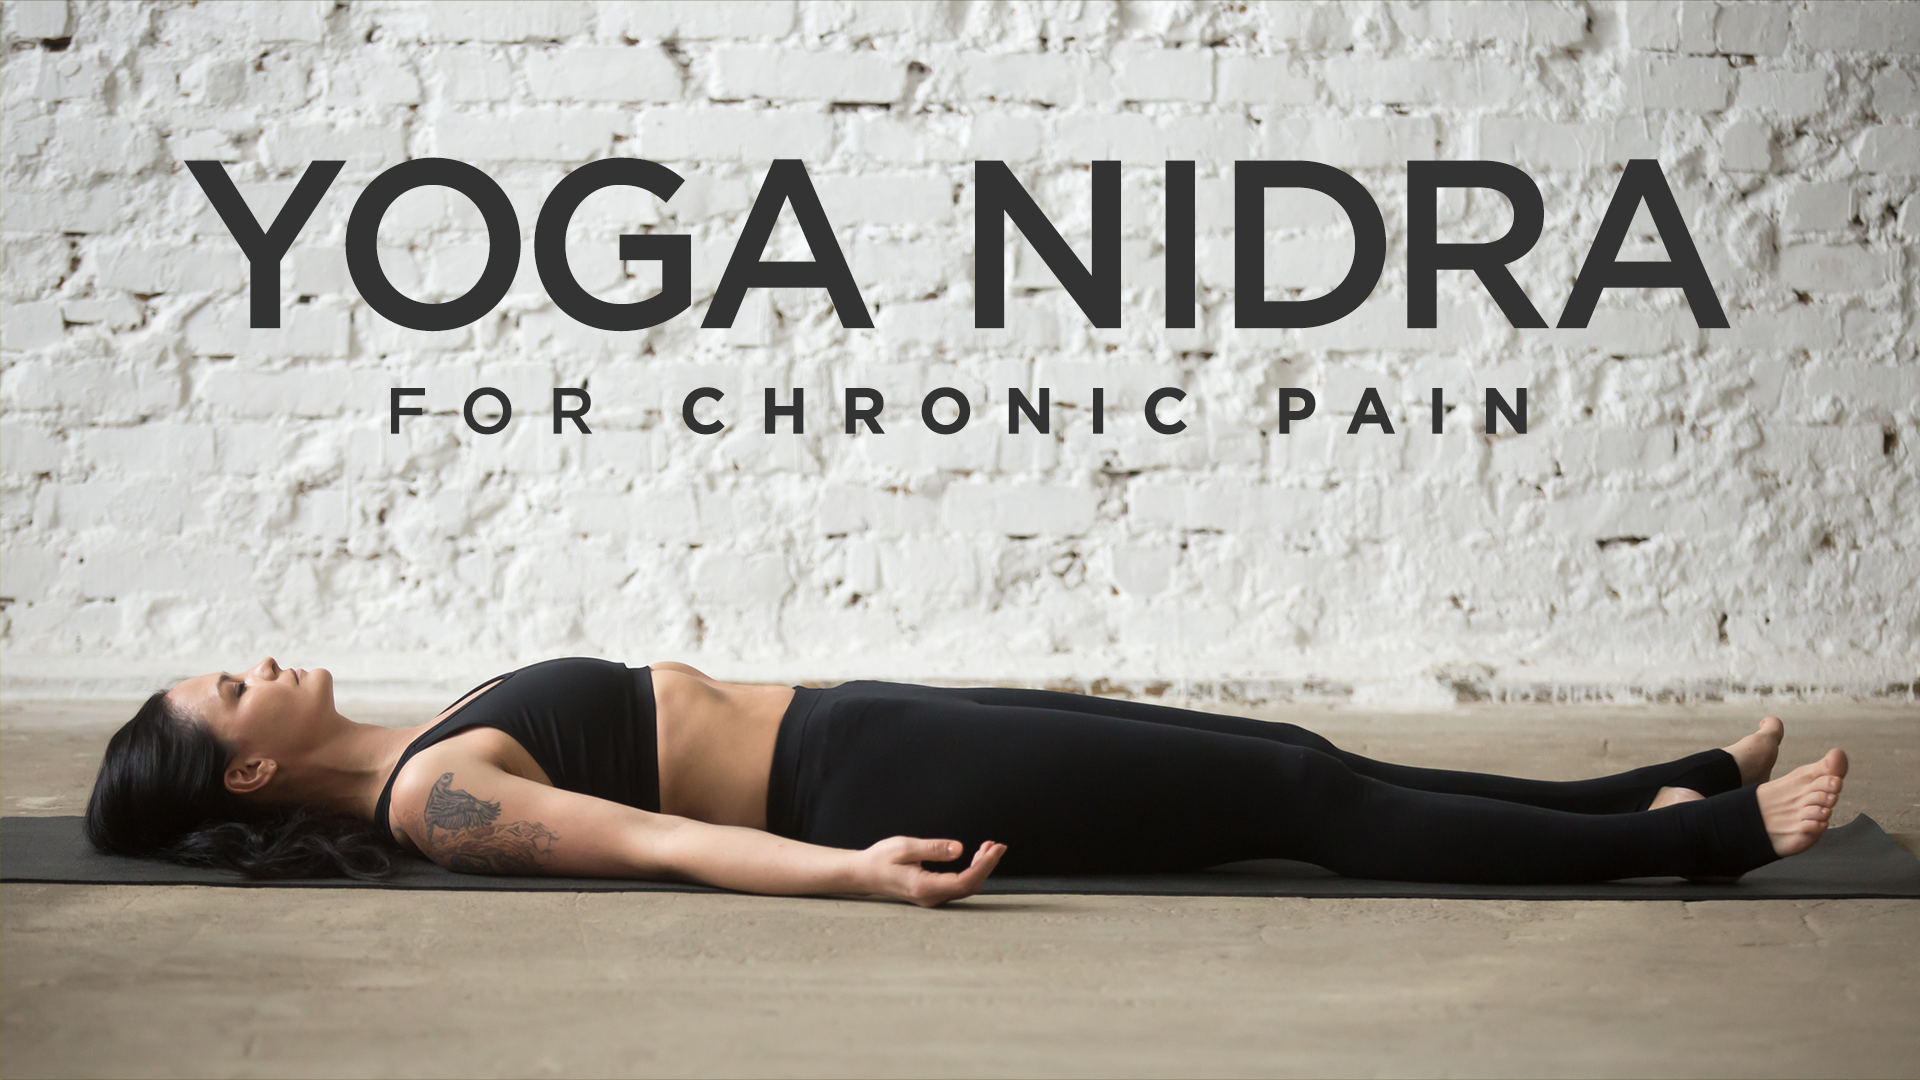 Free yoga nidra meditation script